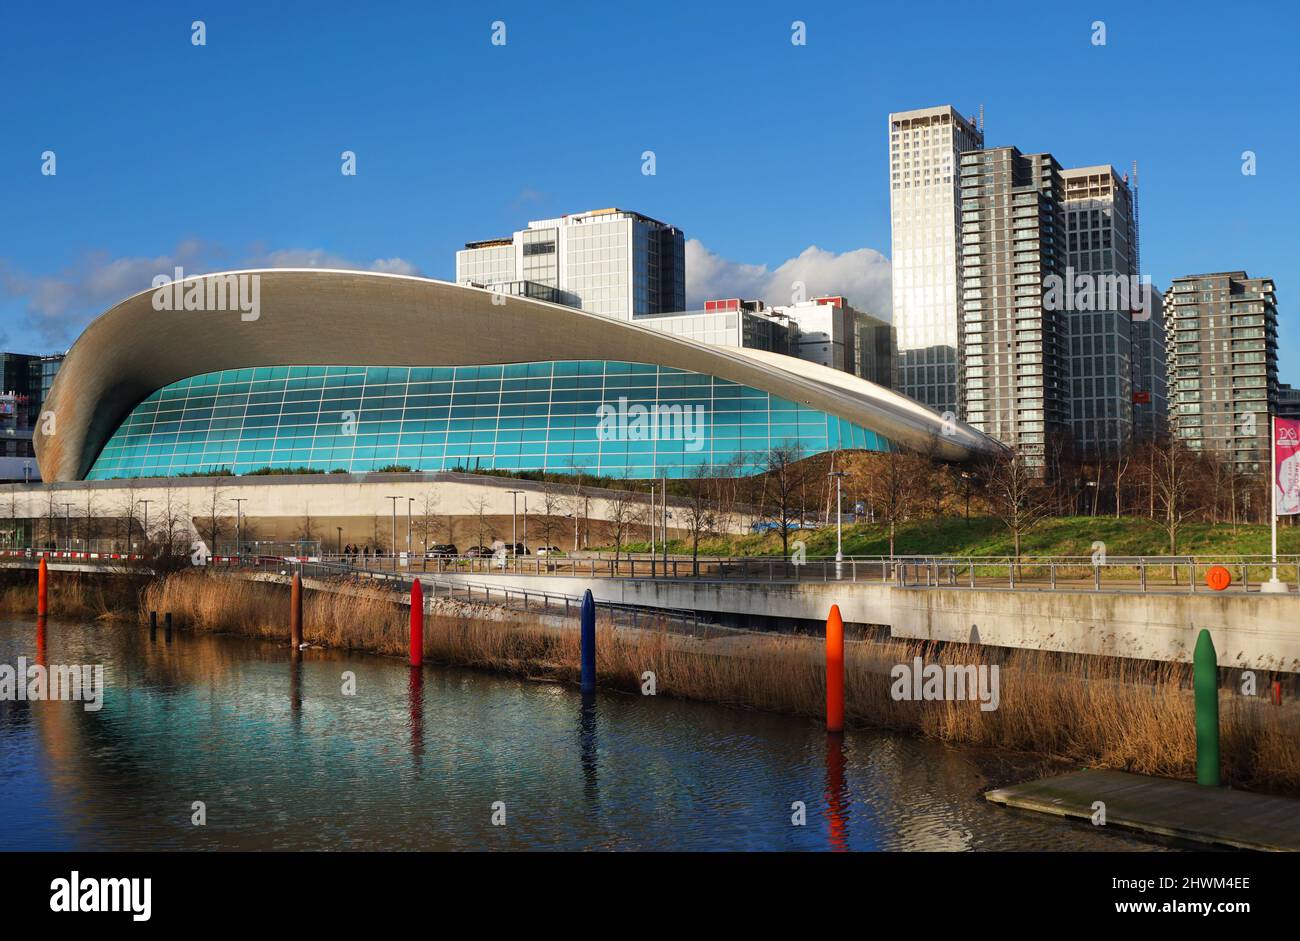 Europe, UK, England, London, Stratford, Olympic Park Aquatic center Stock Photo